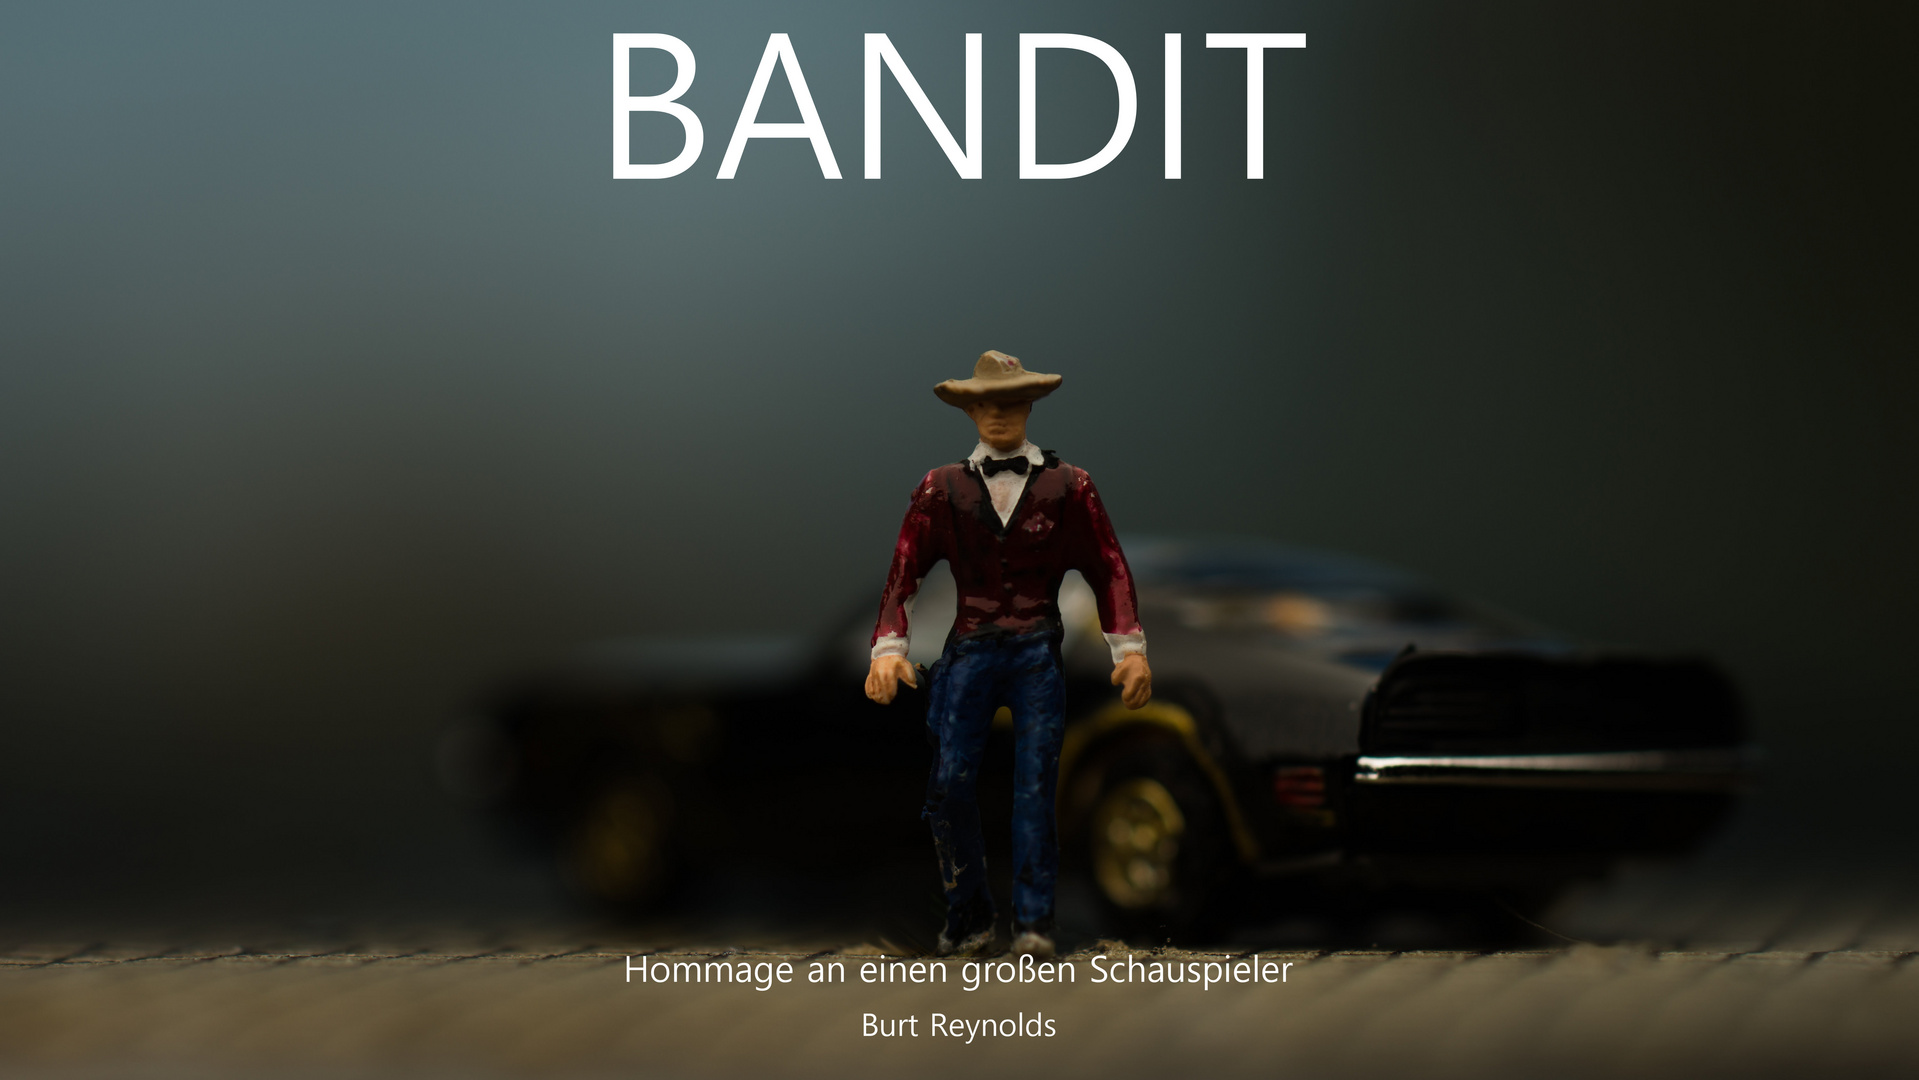 Bandit 